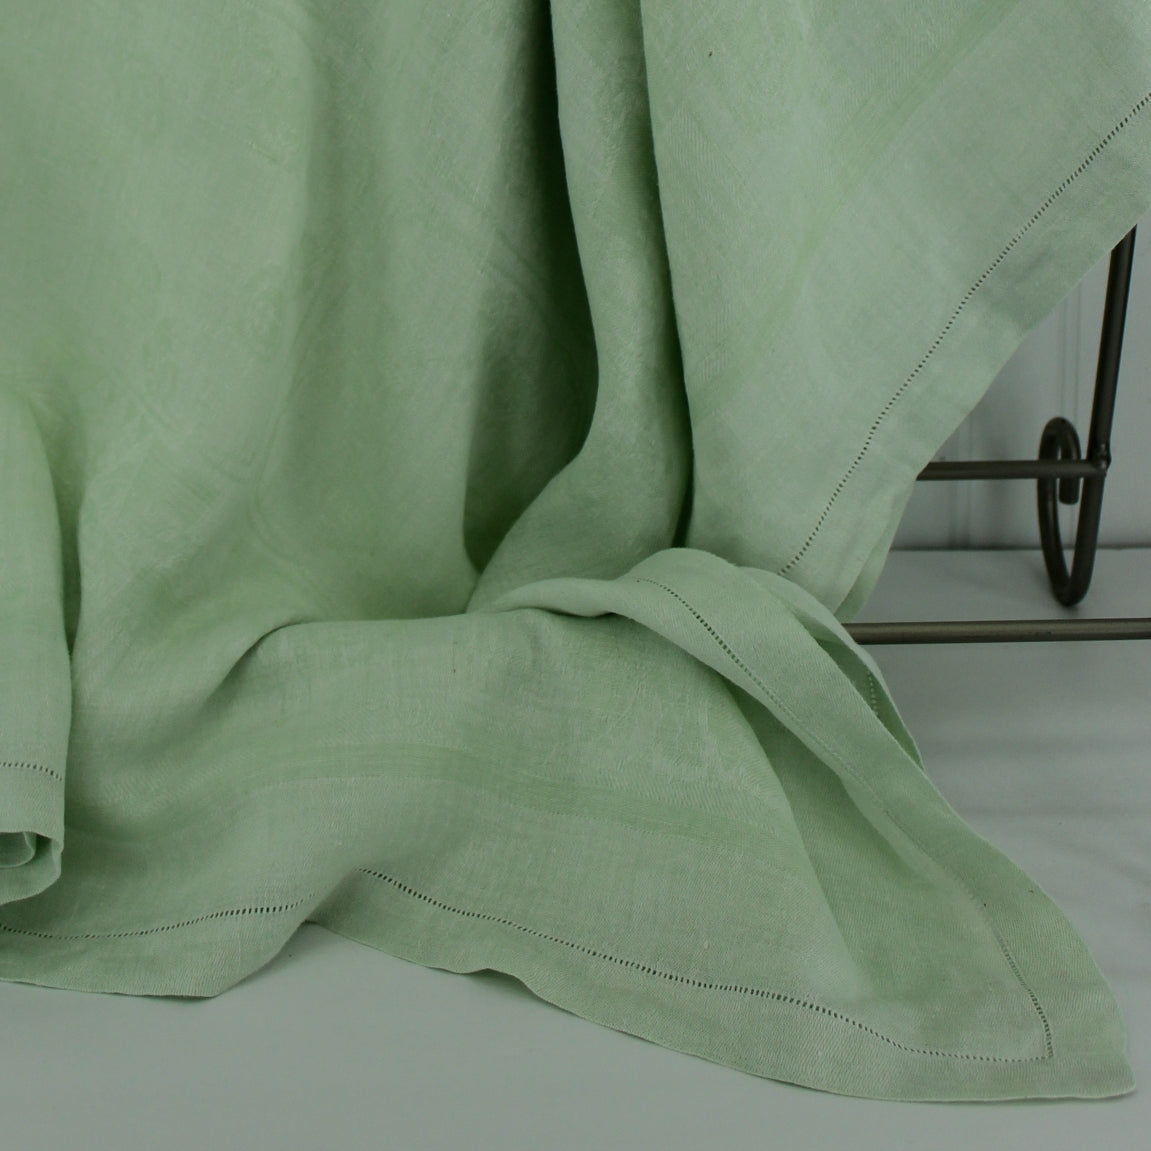 Celery Green Older Tablecloth Light Weight Woven Design 51" X 52" mid century era